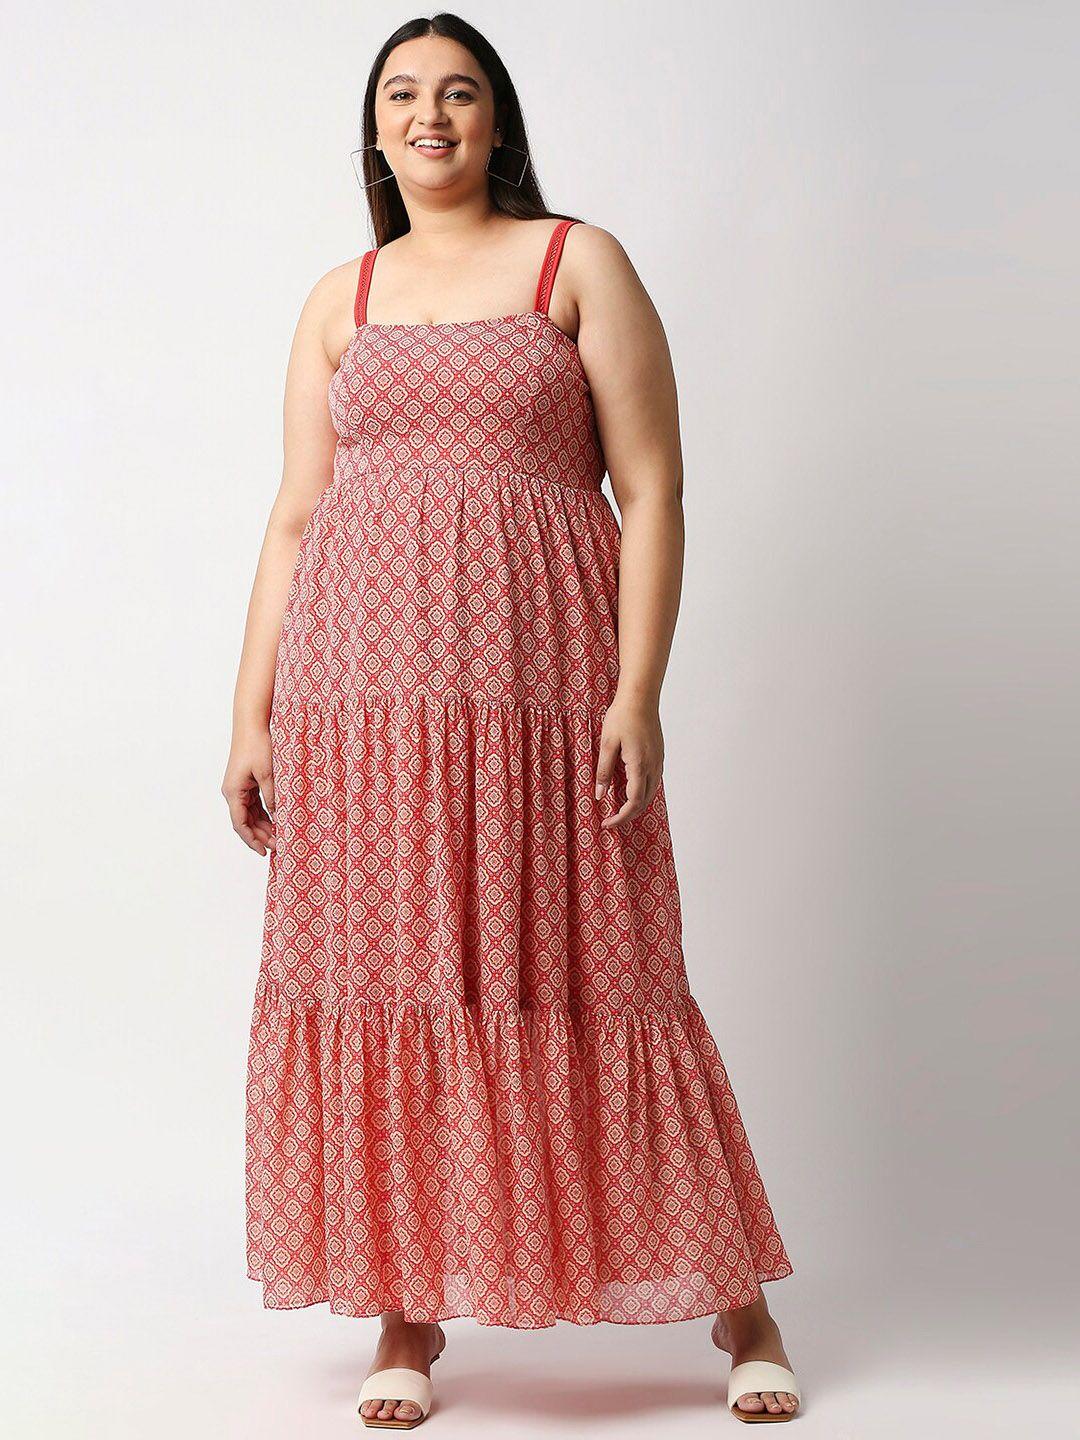 20dresses-plus-size-red-chiffon-maxi-dress